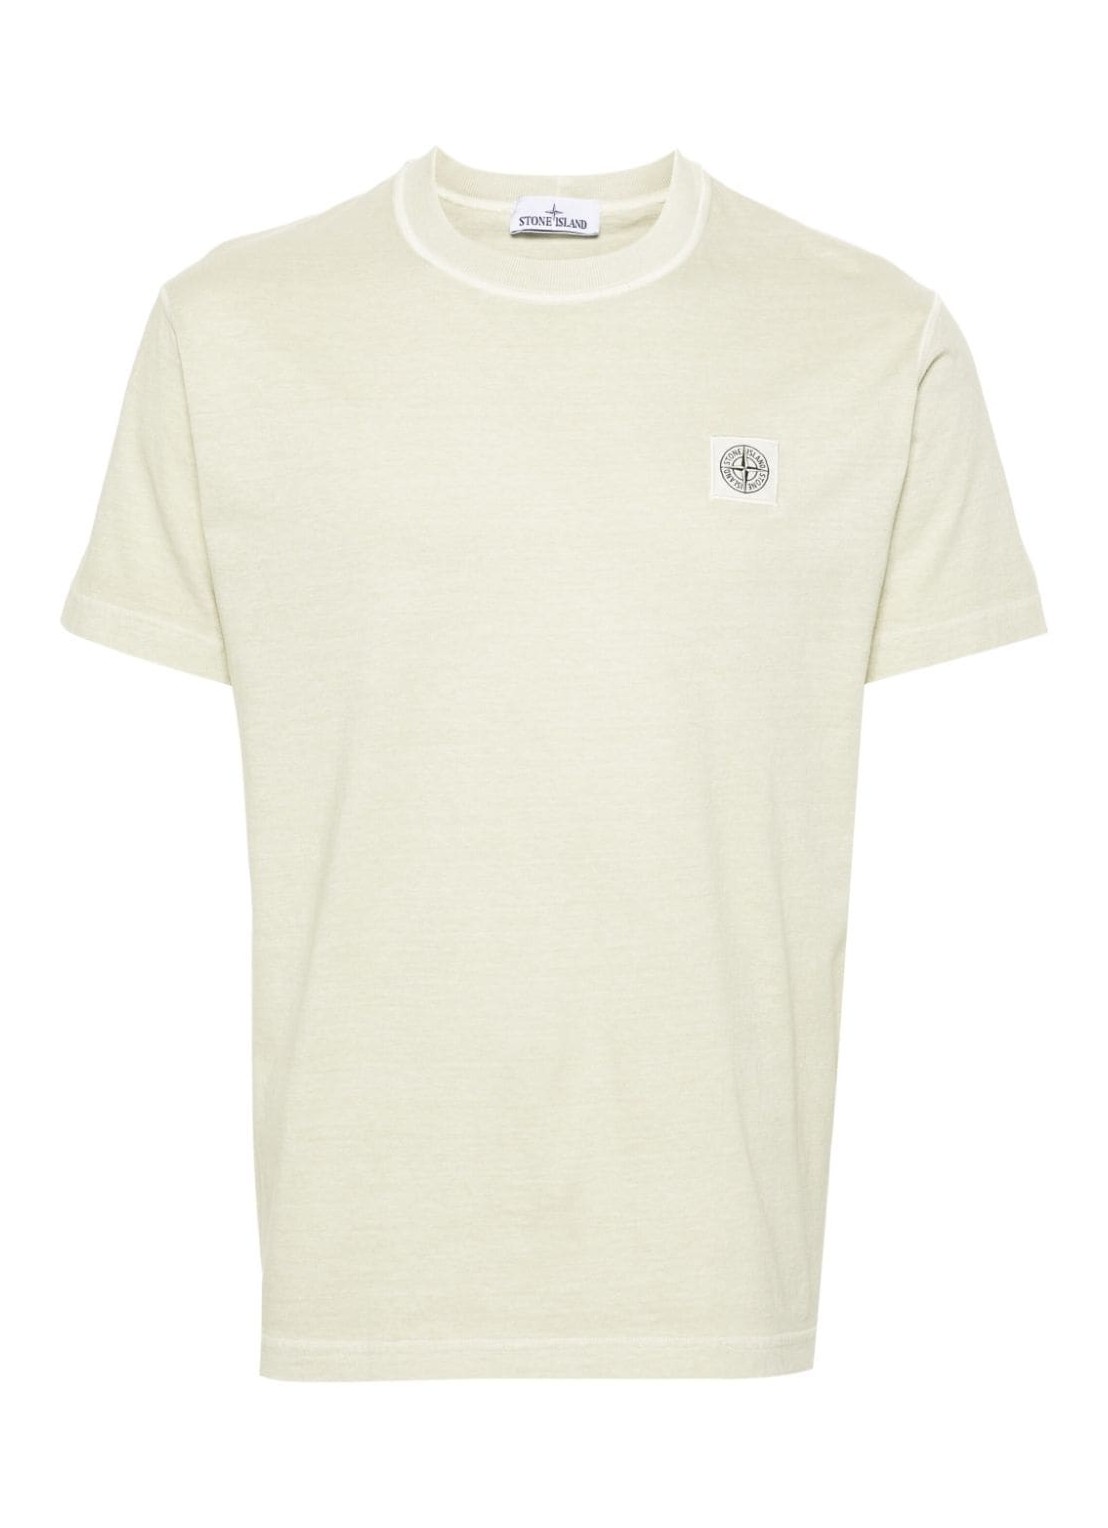 Camiseta stone island t-shirt man t shirt 801523757 v0151 talla XXL
 